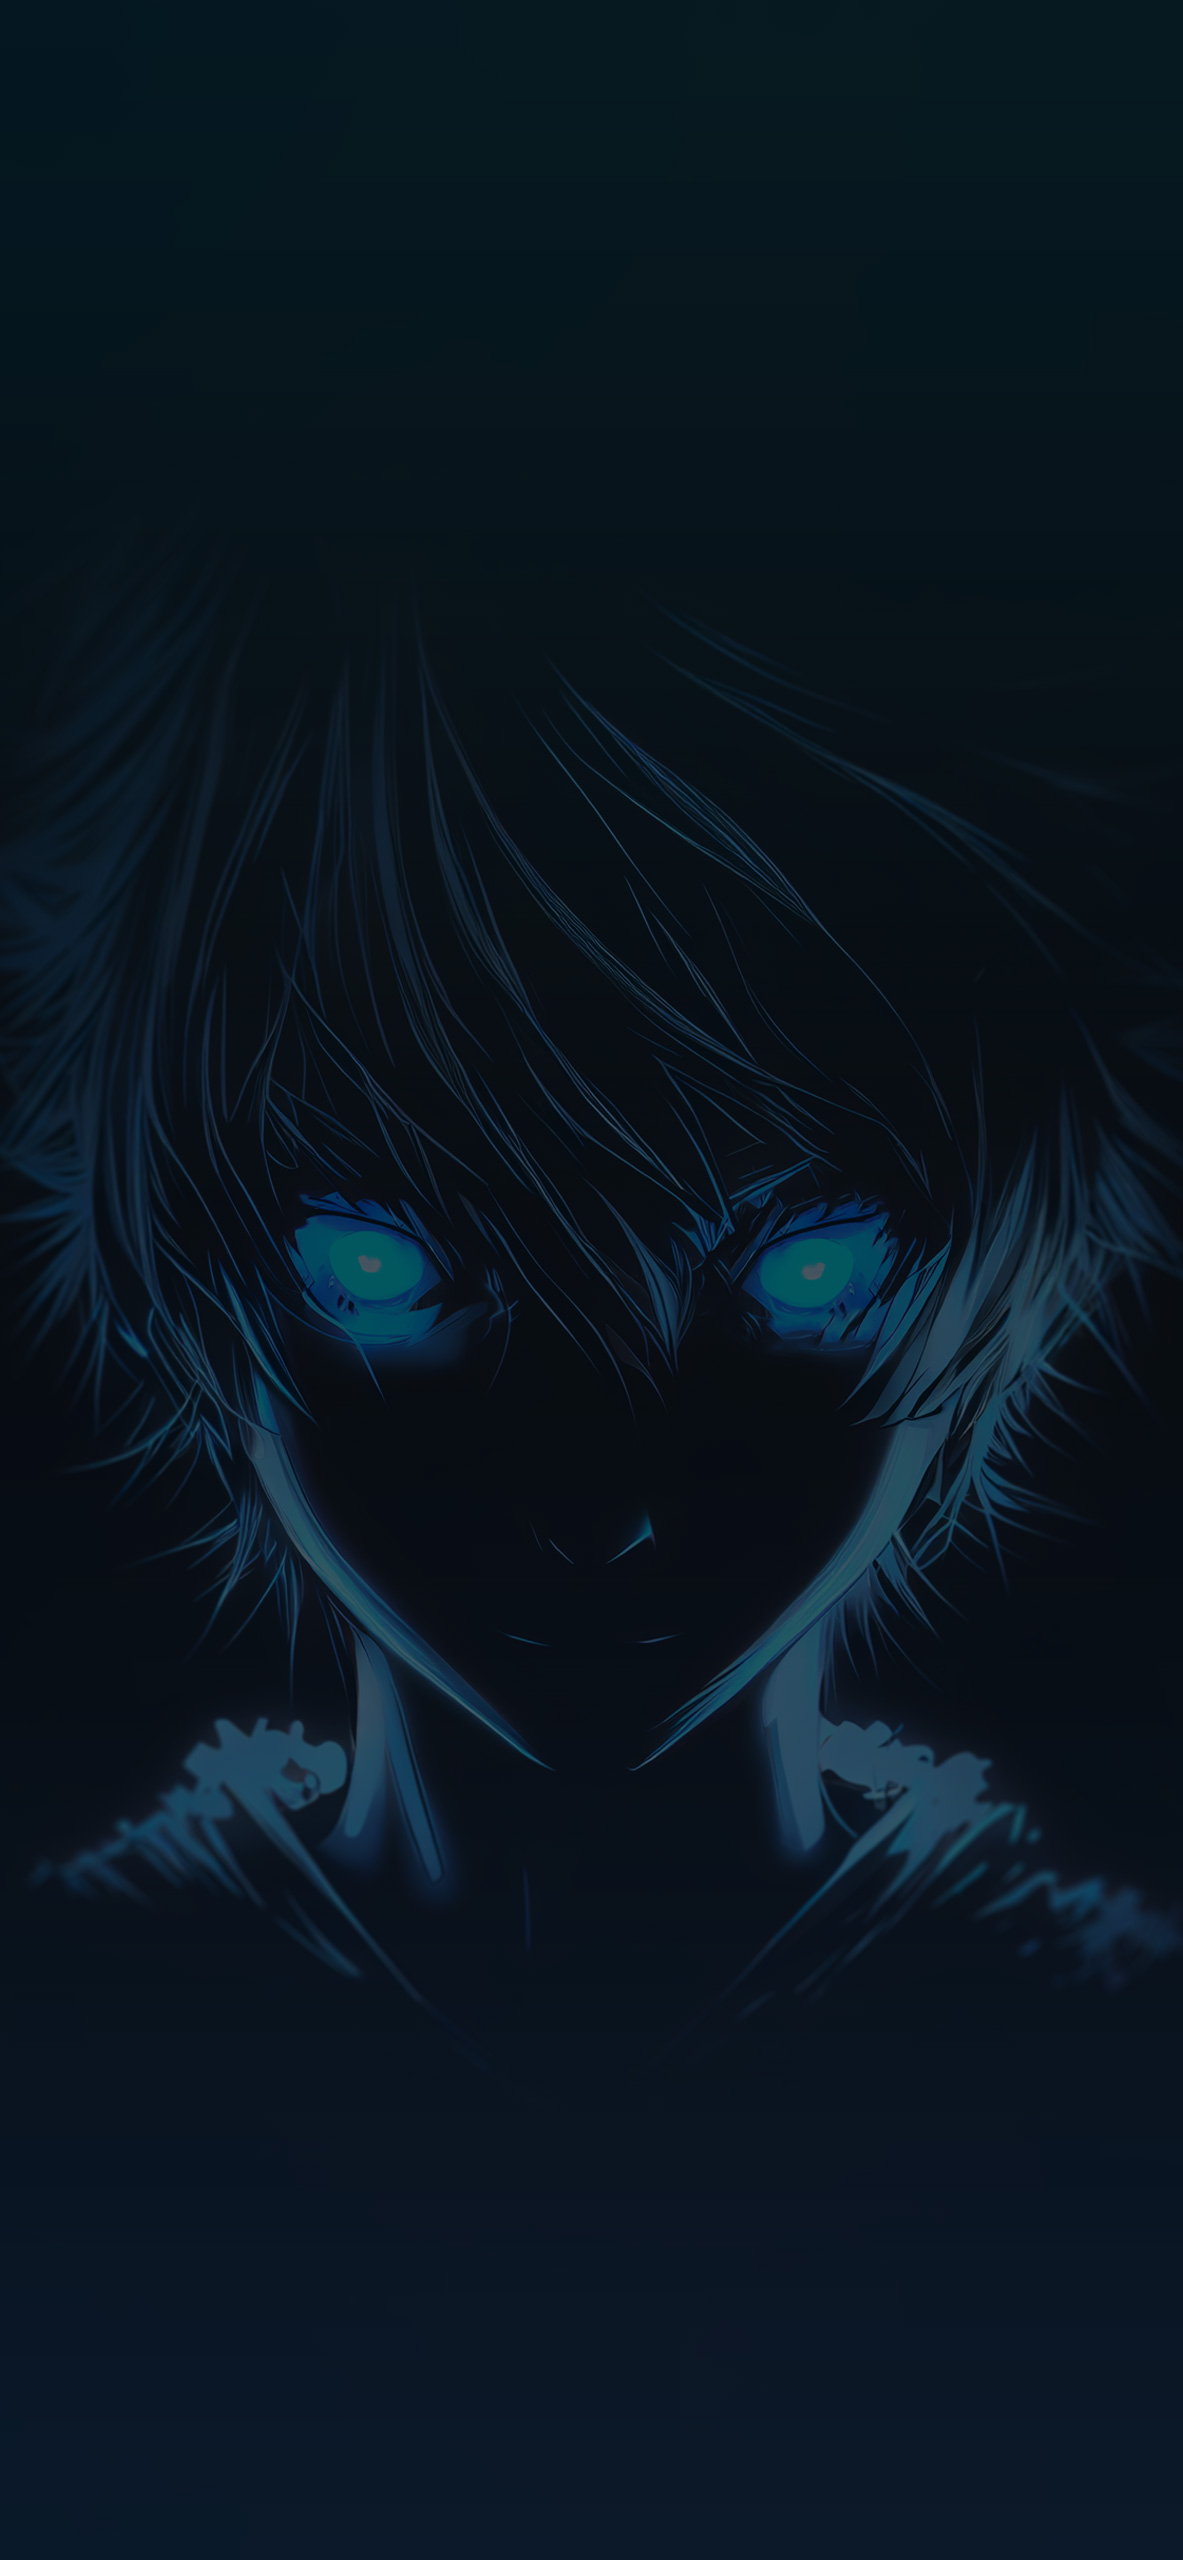 Boy with Blue Glowing Eyes Anime